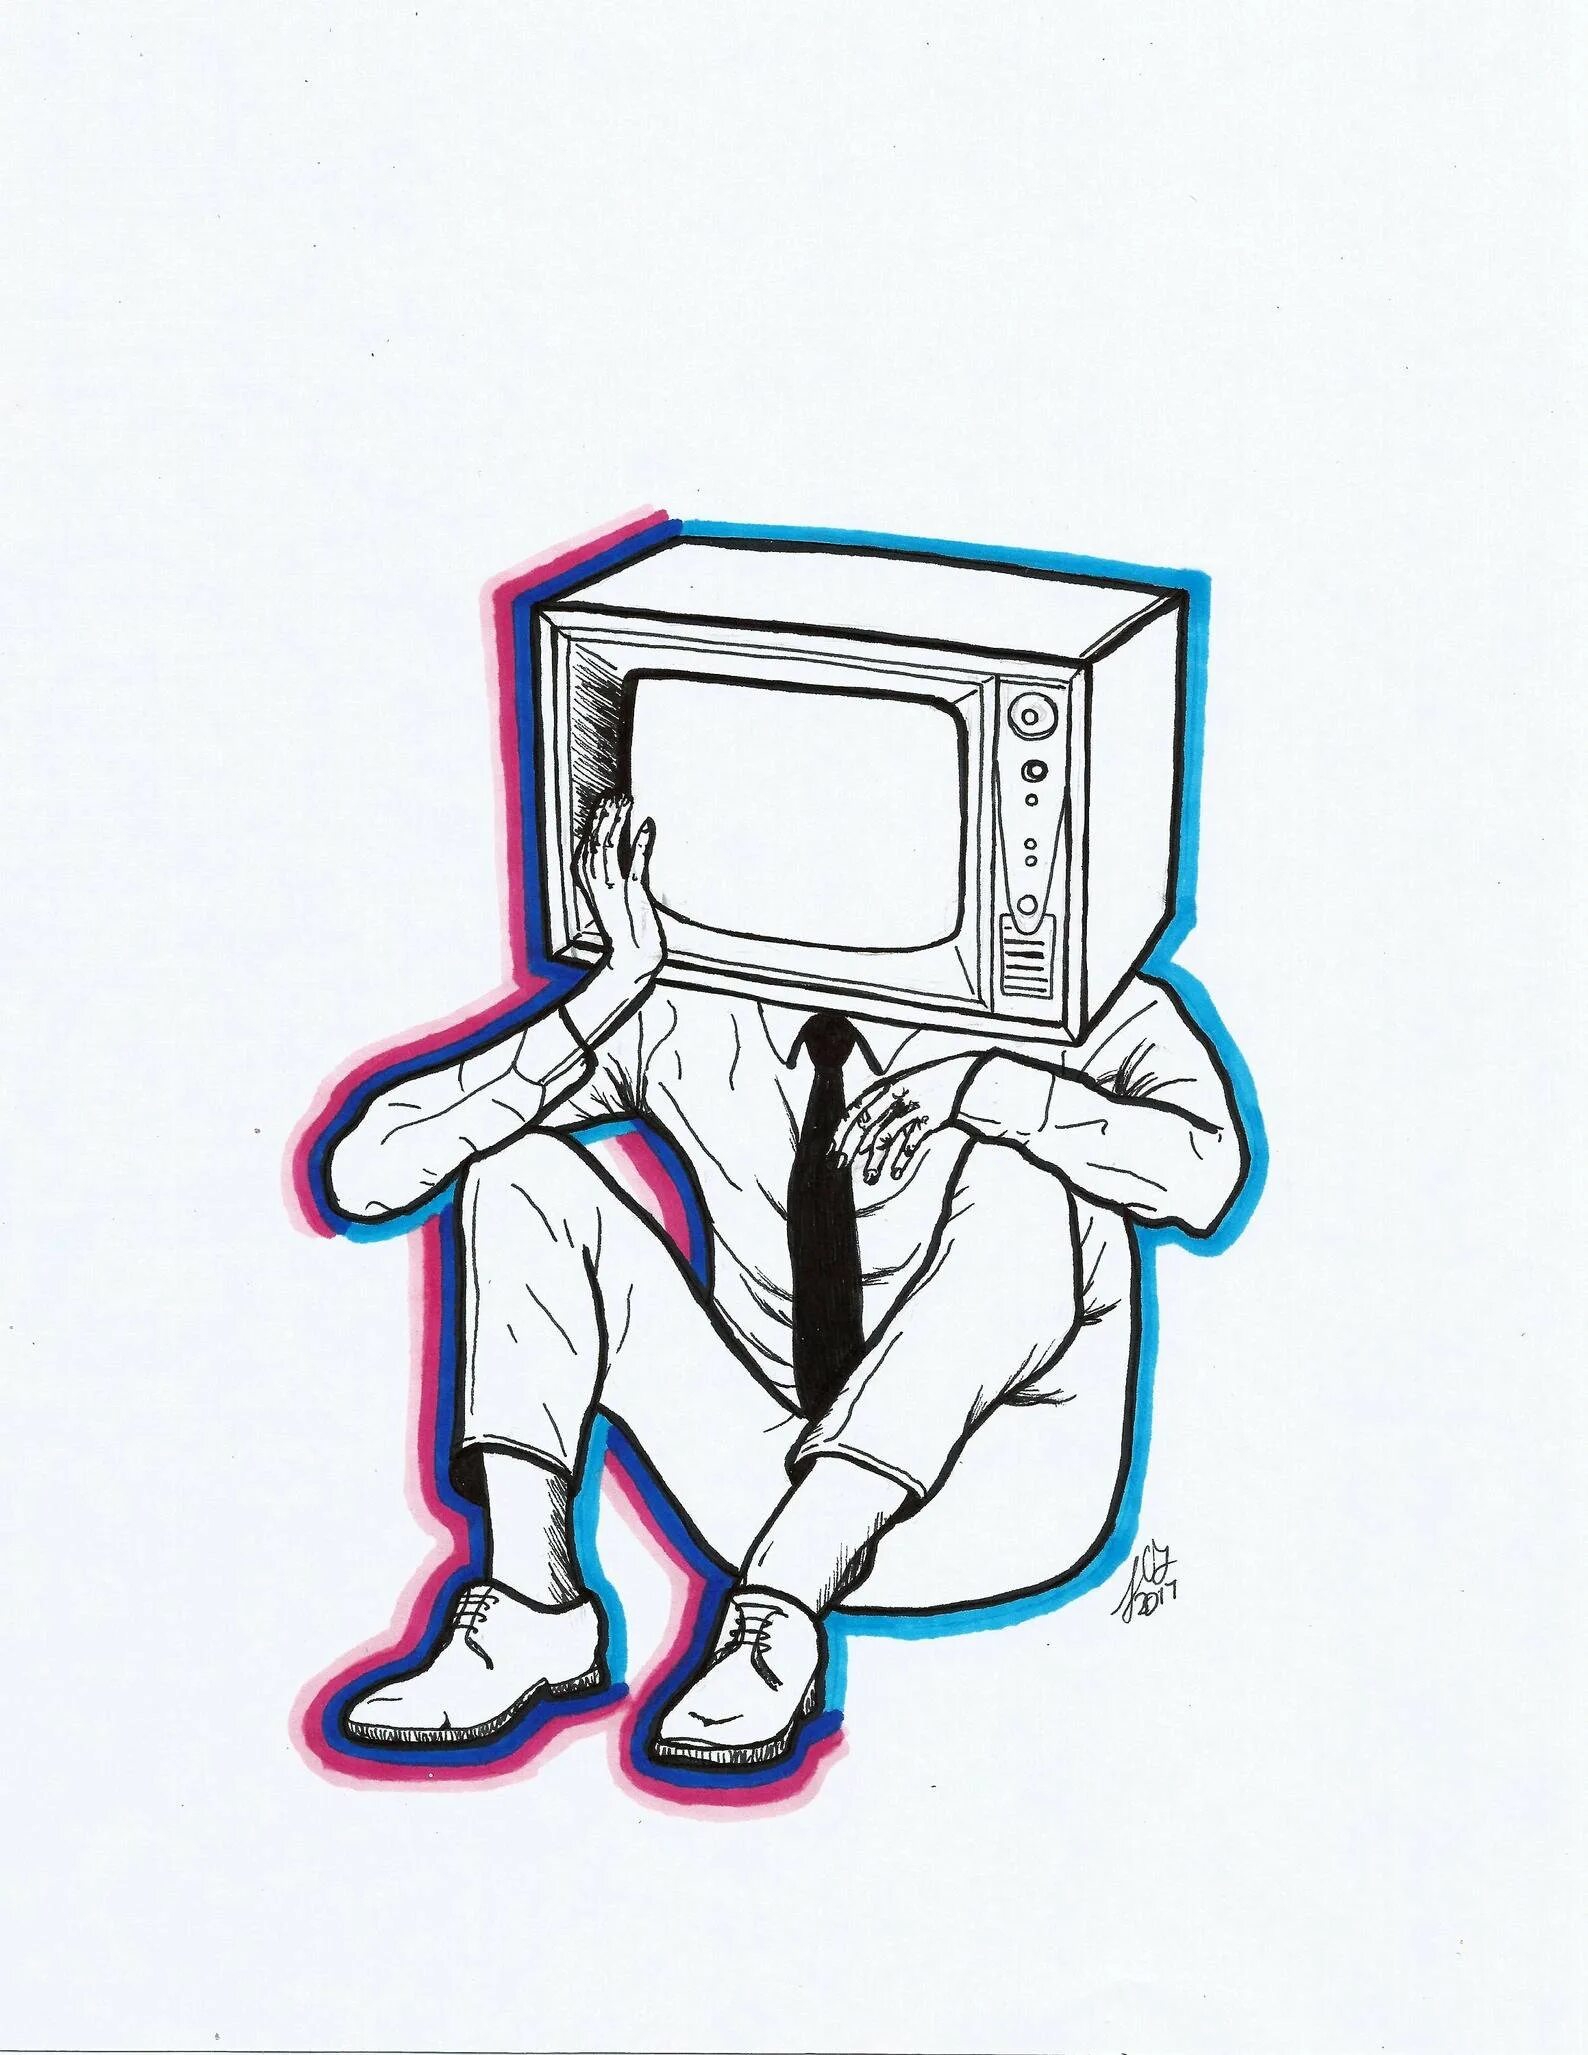 Телевизор вместо головы. Телевизор иллюстрация. Человек с головой телевизора. Человек телевизор арт. Персонаж с телевизором на голове.